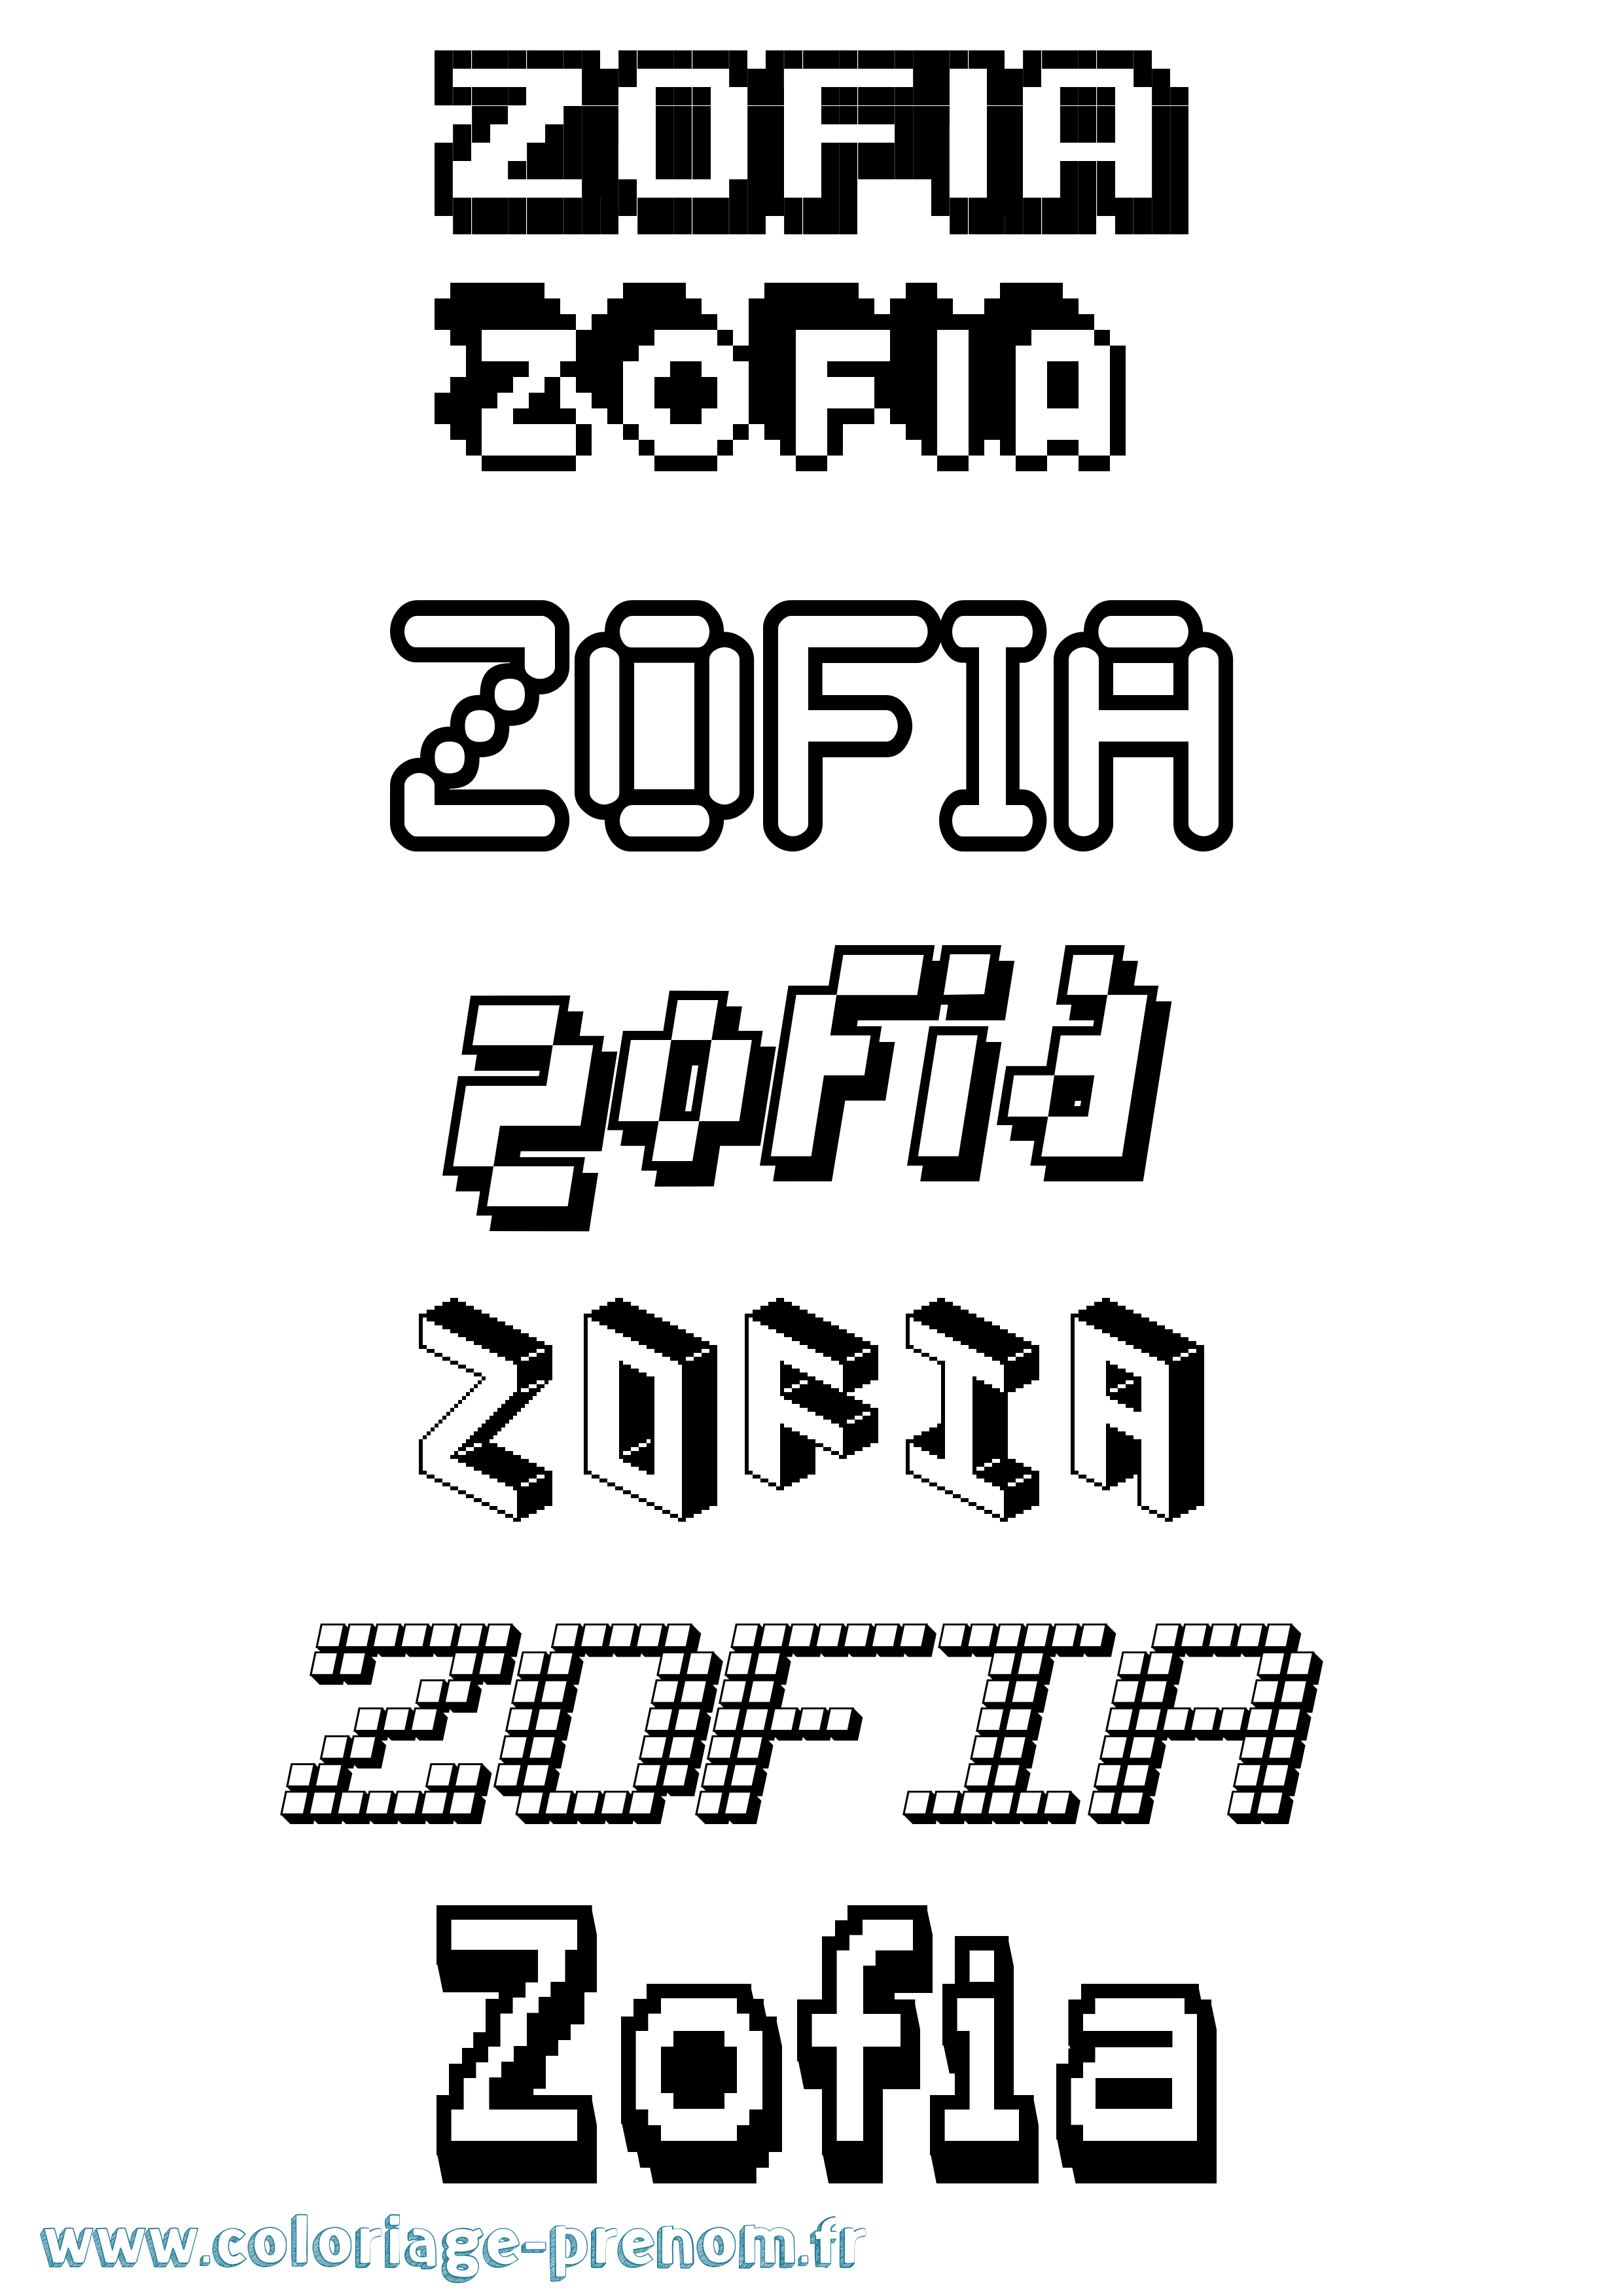 Coloriage prénom Zofia Pixel